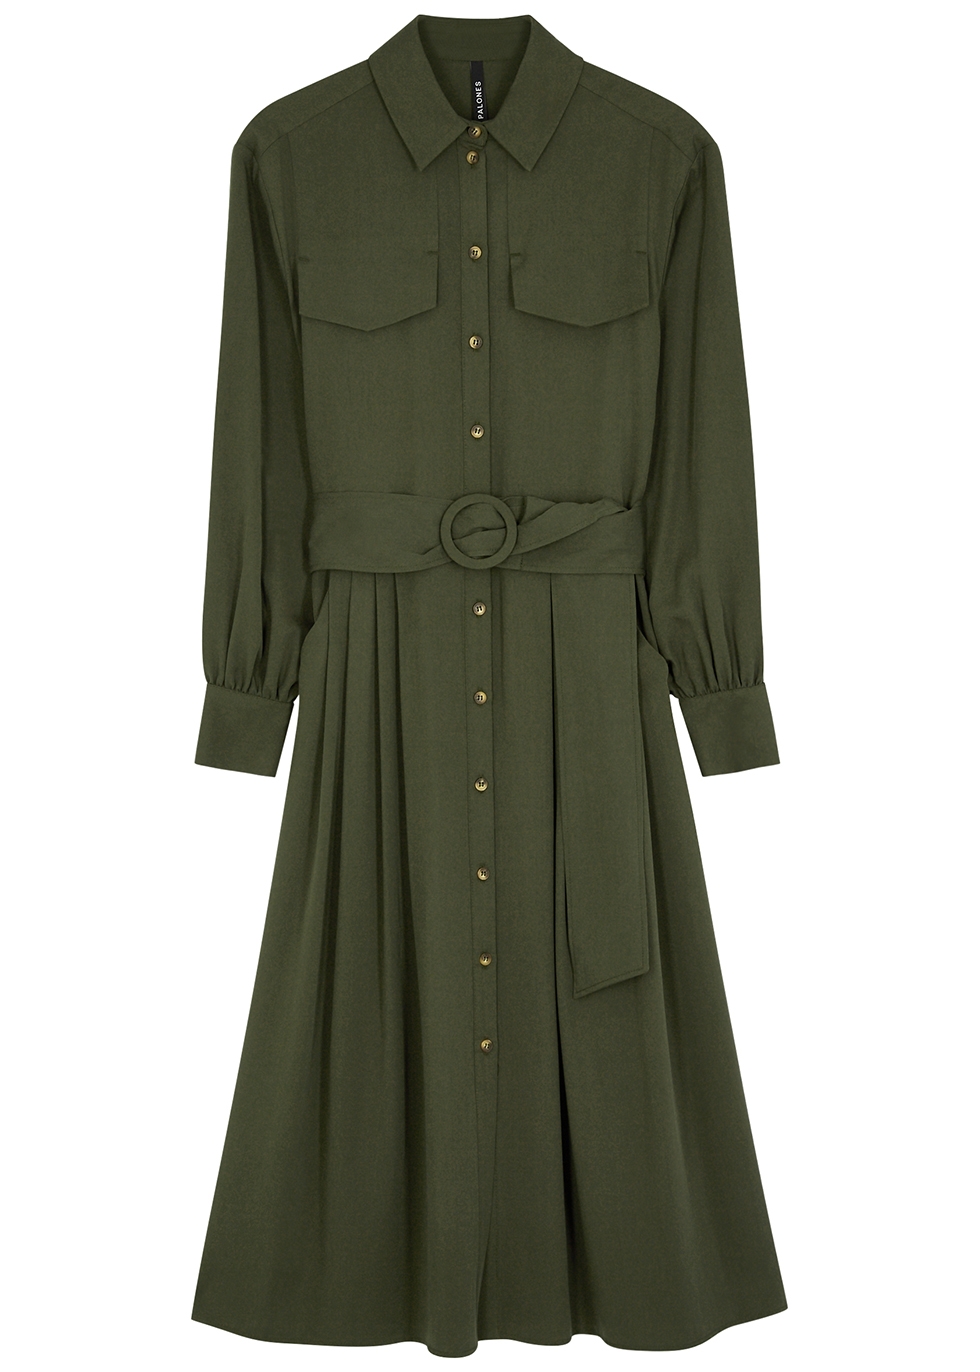 Palones Army green belted shirt dress - Harvey Nichols